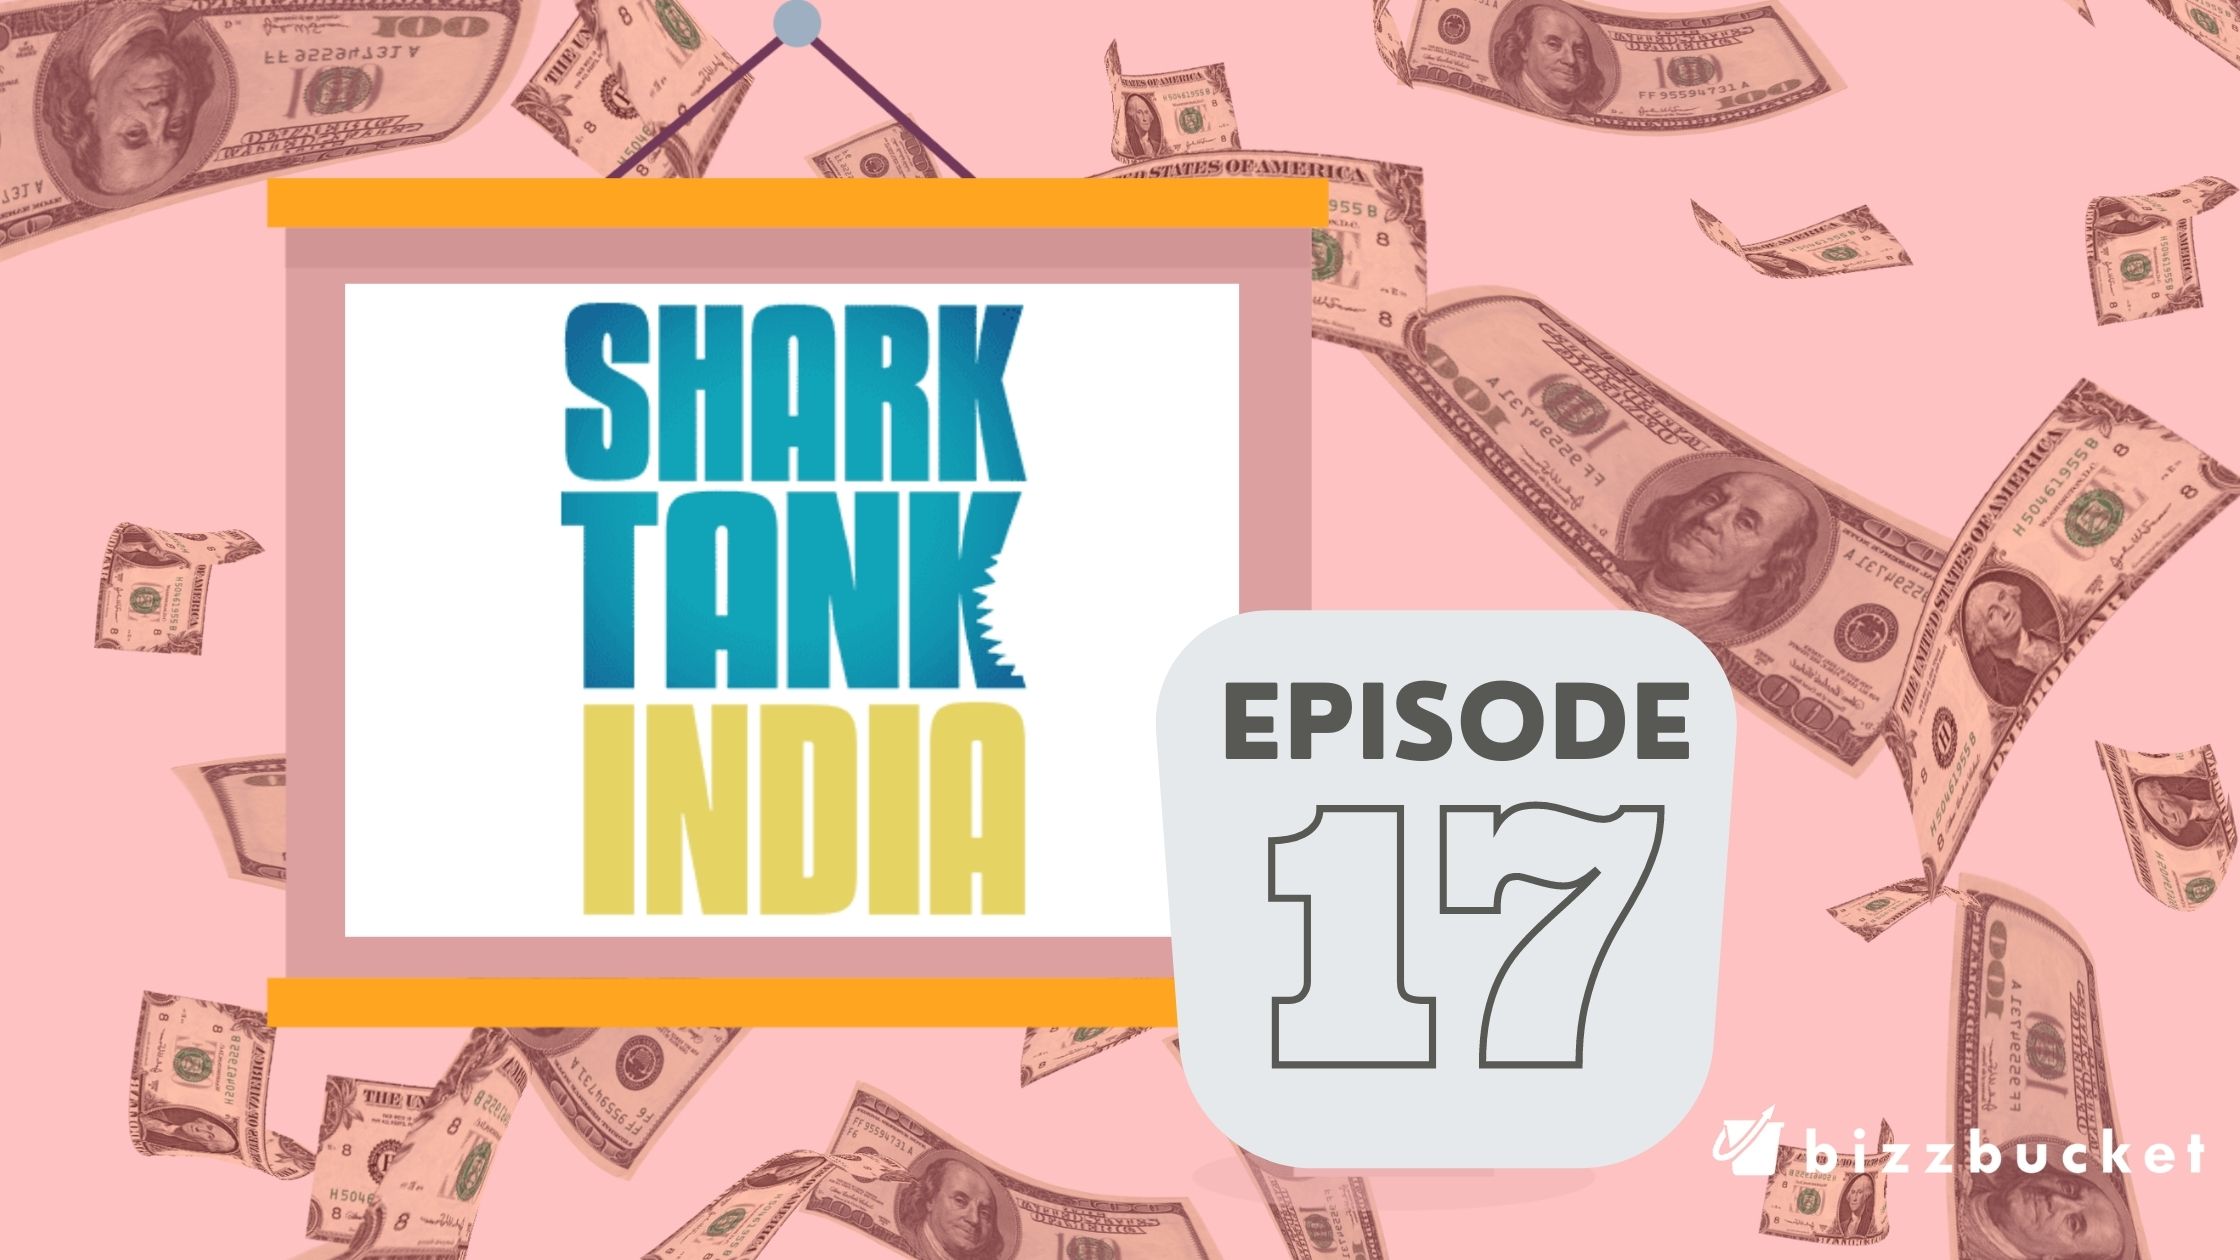 Shark tank india episode 17